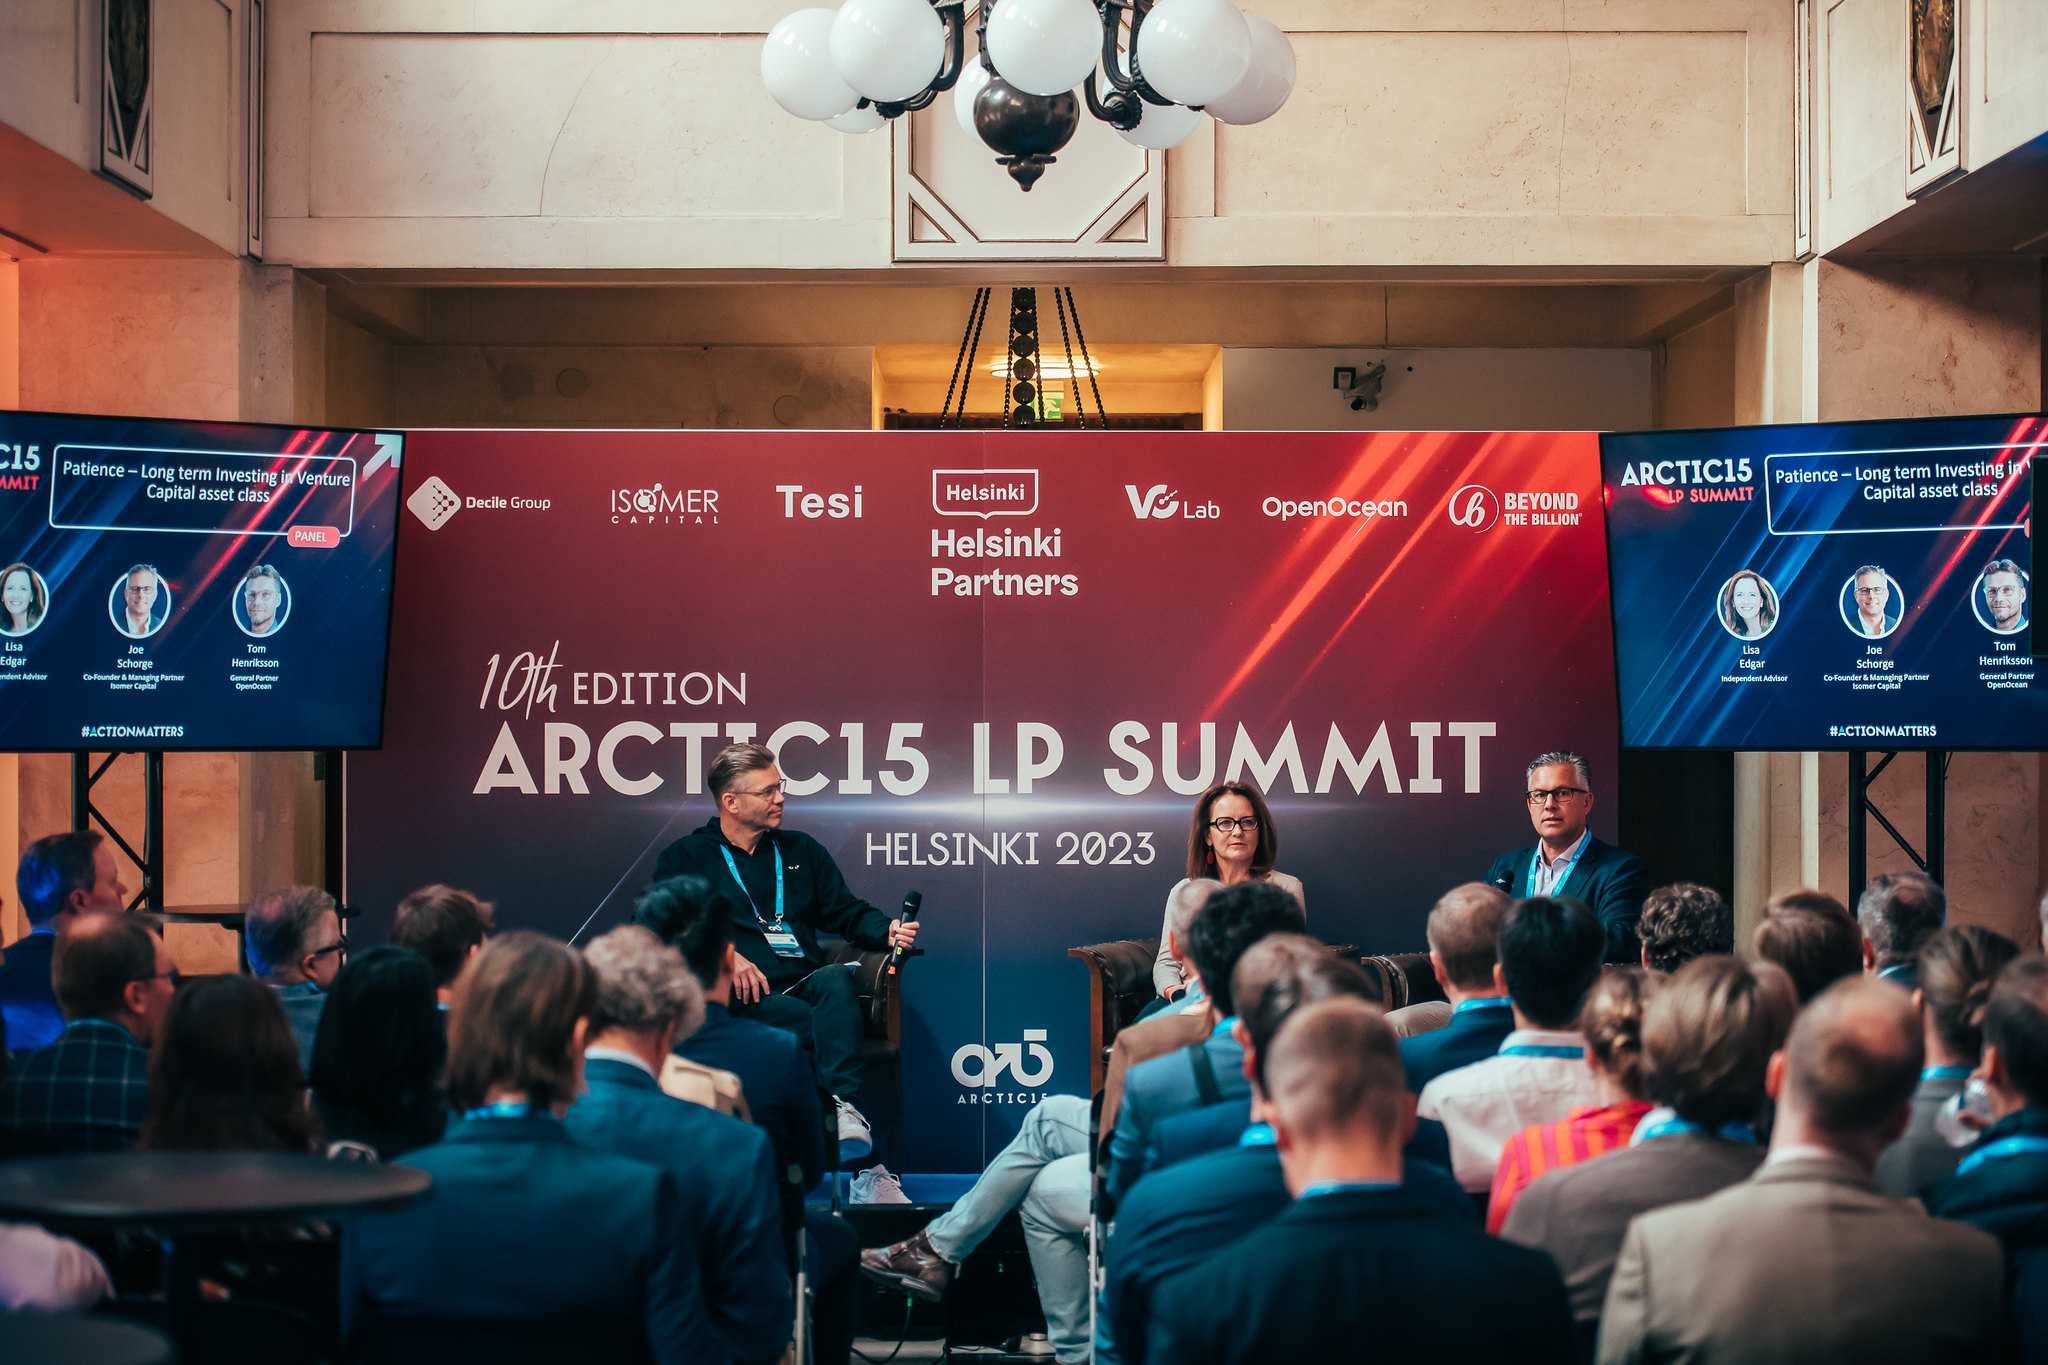 LP Summit 2023 - Arctic15 Helsinki